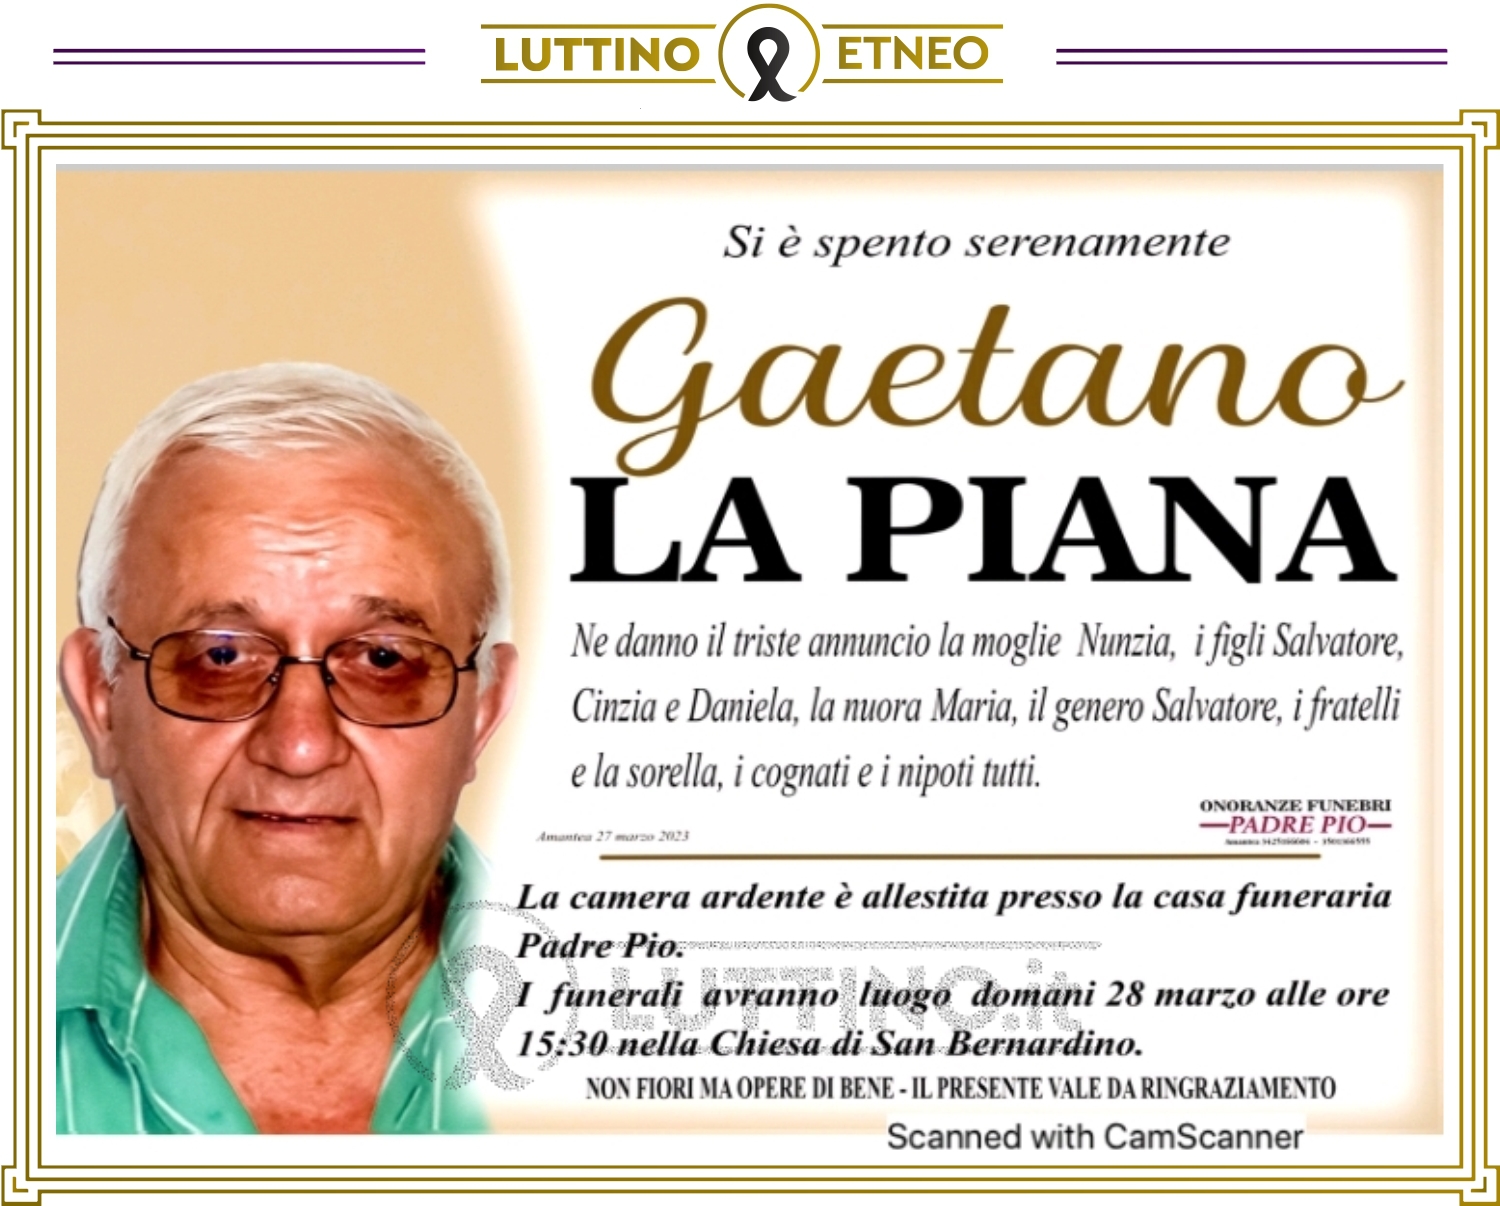 Gaetano La Piana